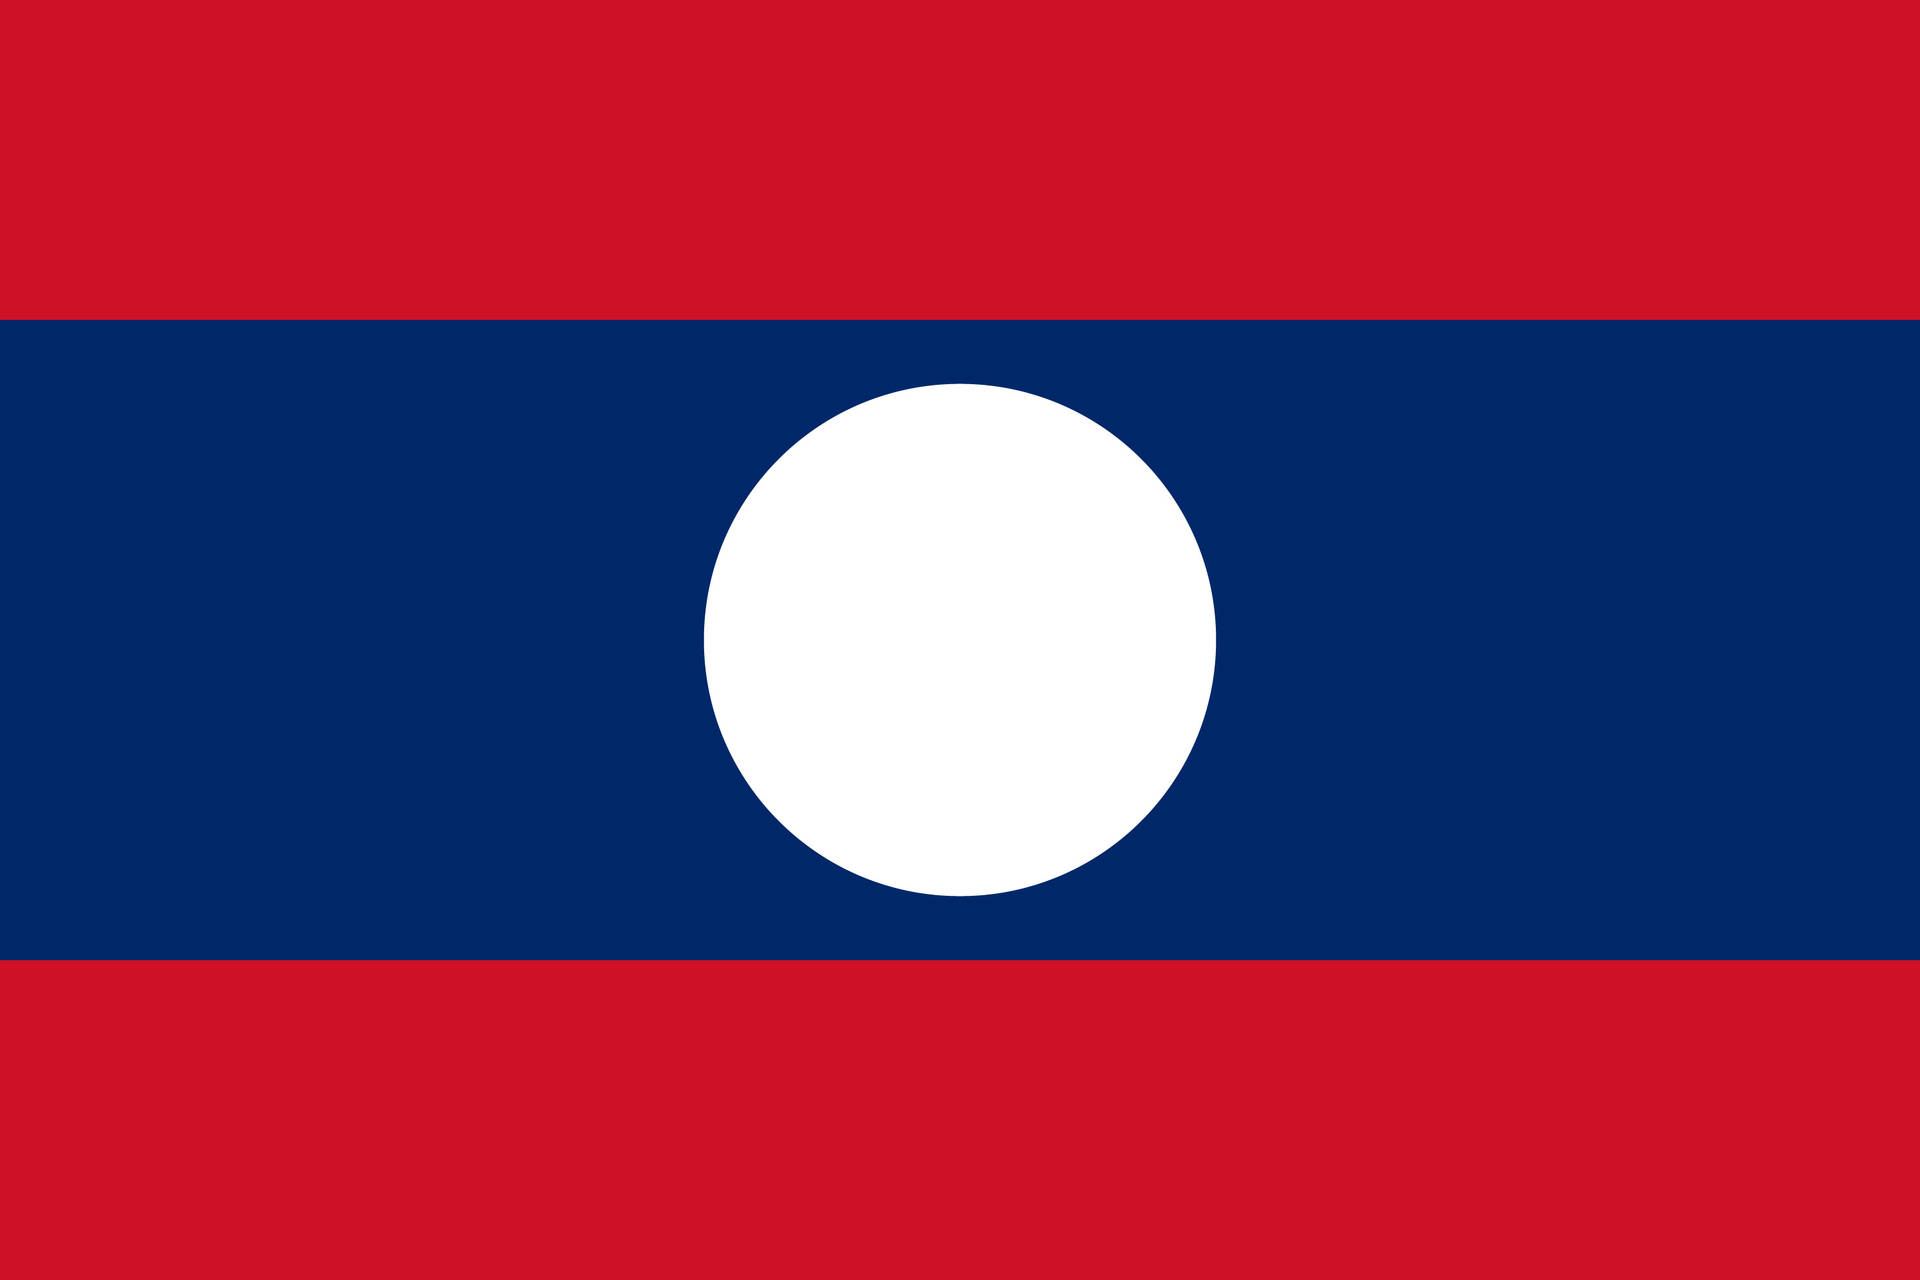 National Flag Of Laos